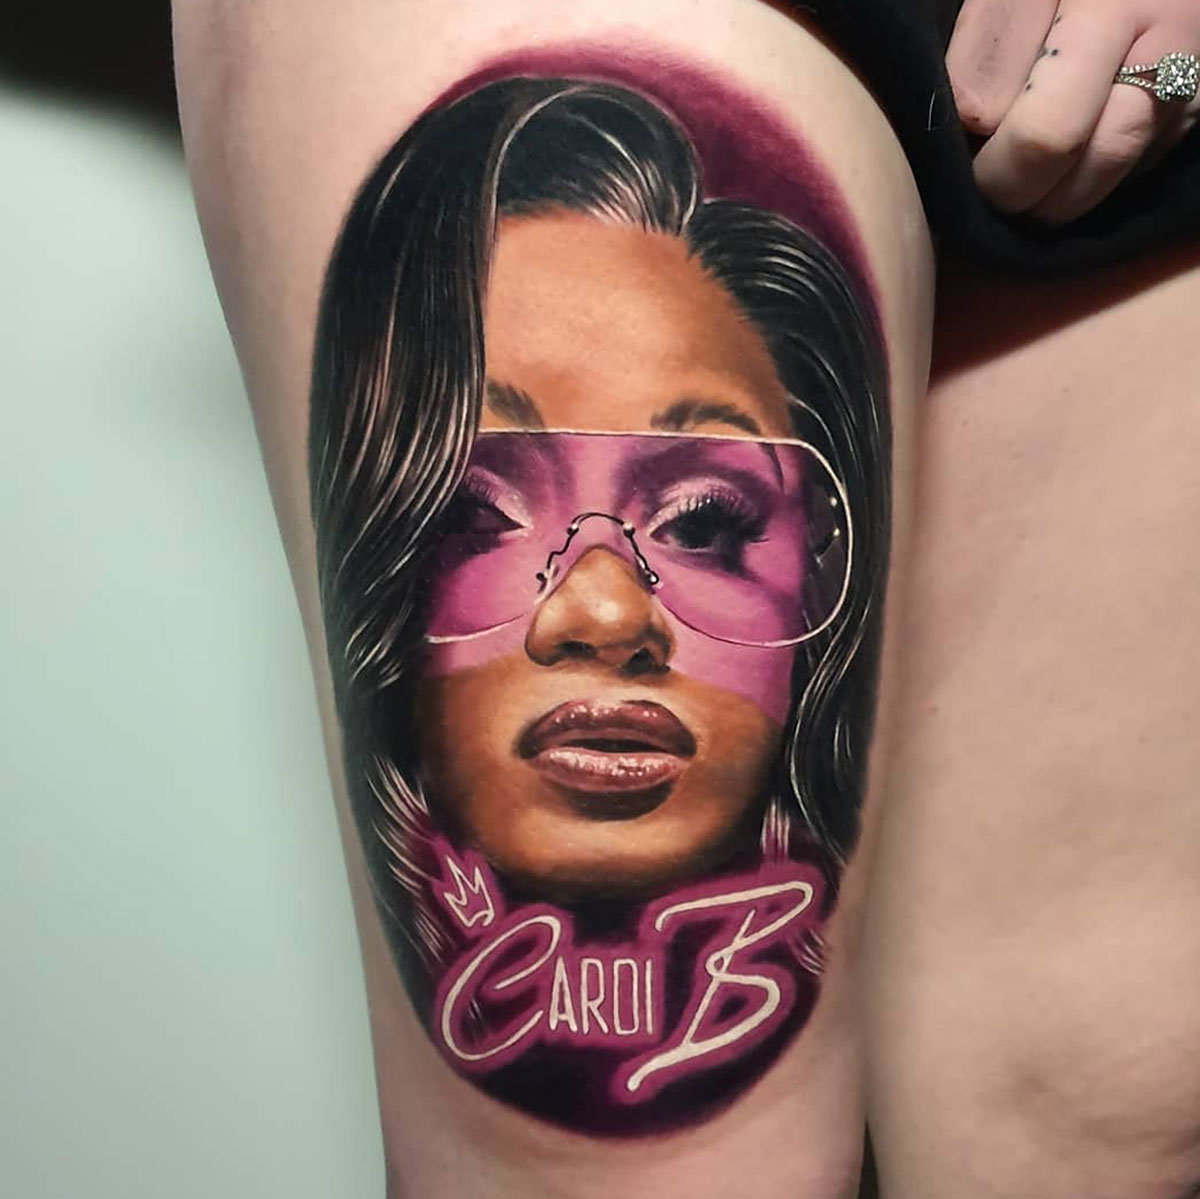 Cardi B Fan Gets Massive Tattoo of the Rapper’s Face: Pics